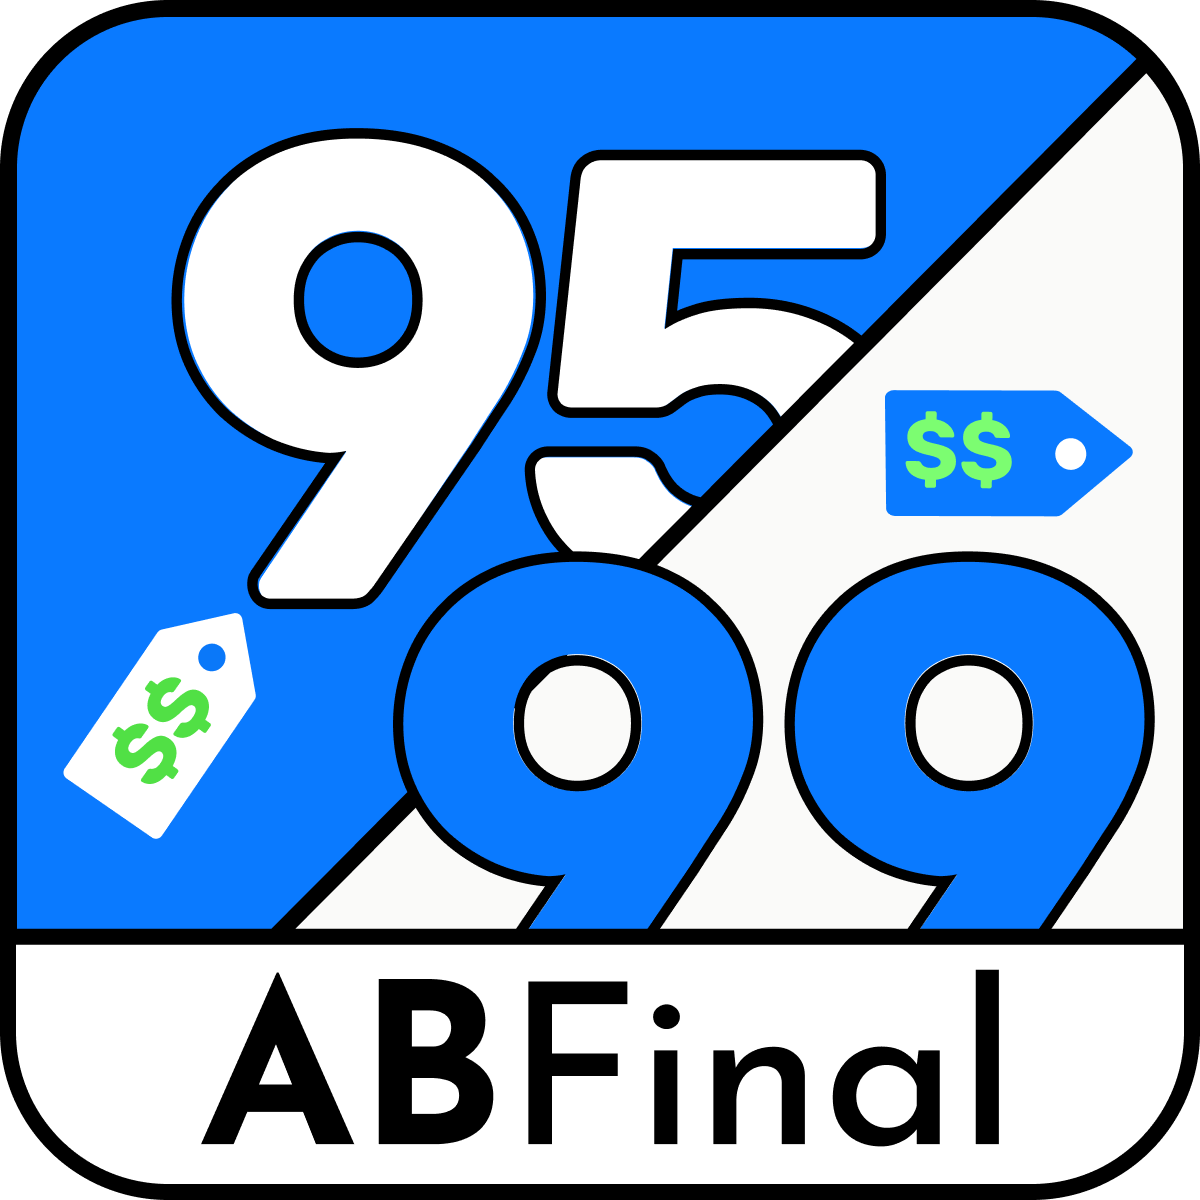 Price AB Testing : A/B Final